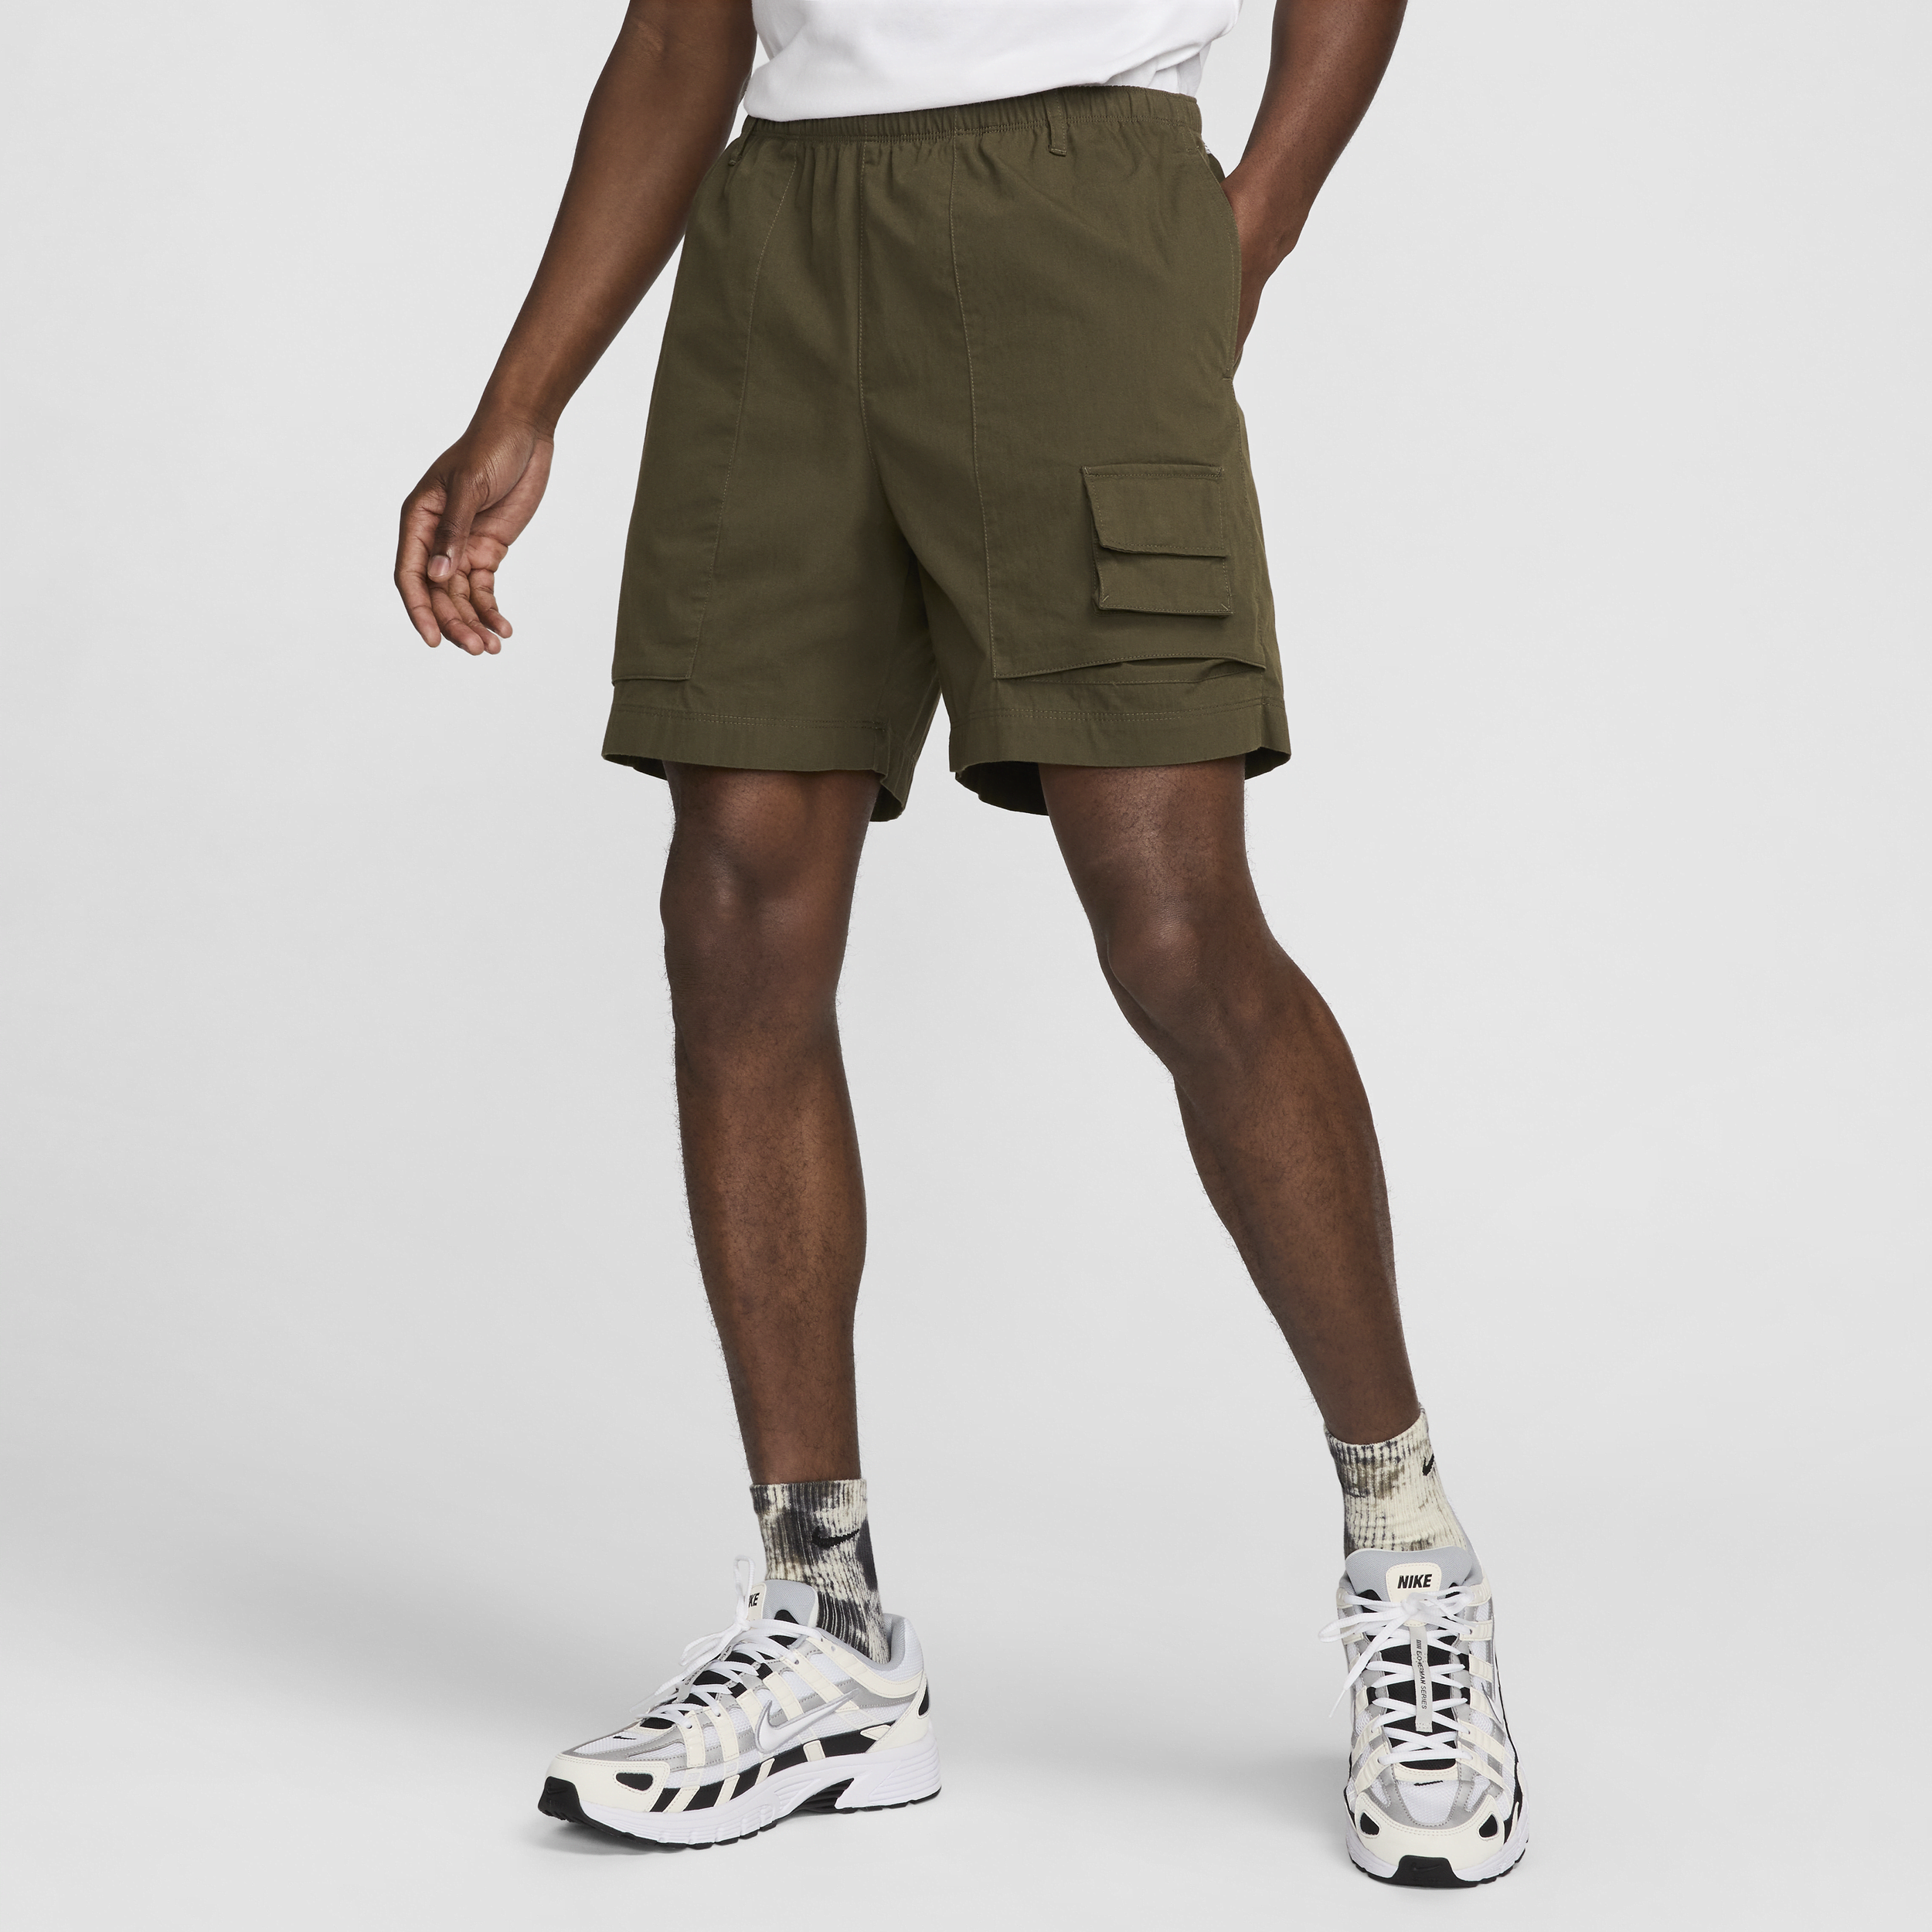 Shorts da campeggio Nike Life – Uomo - Verde